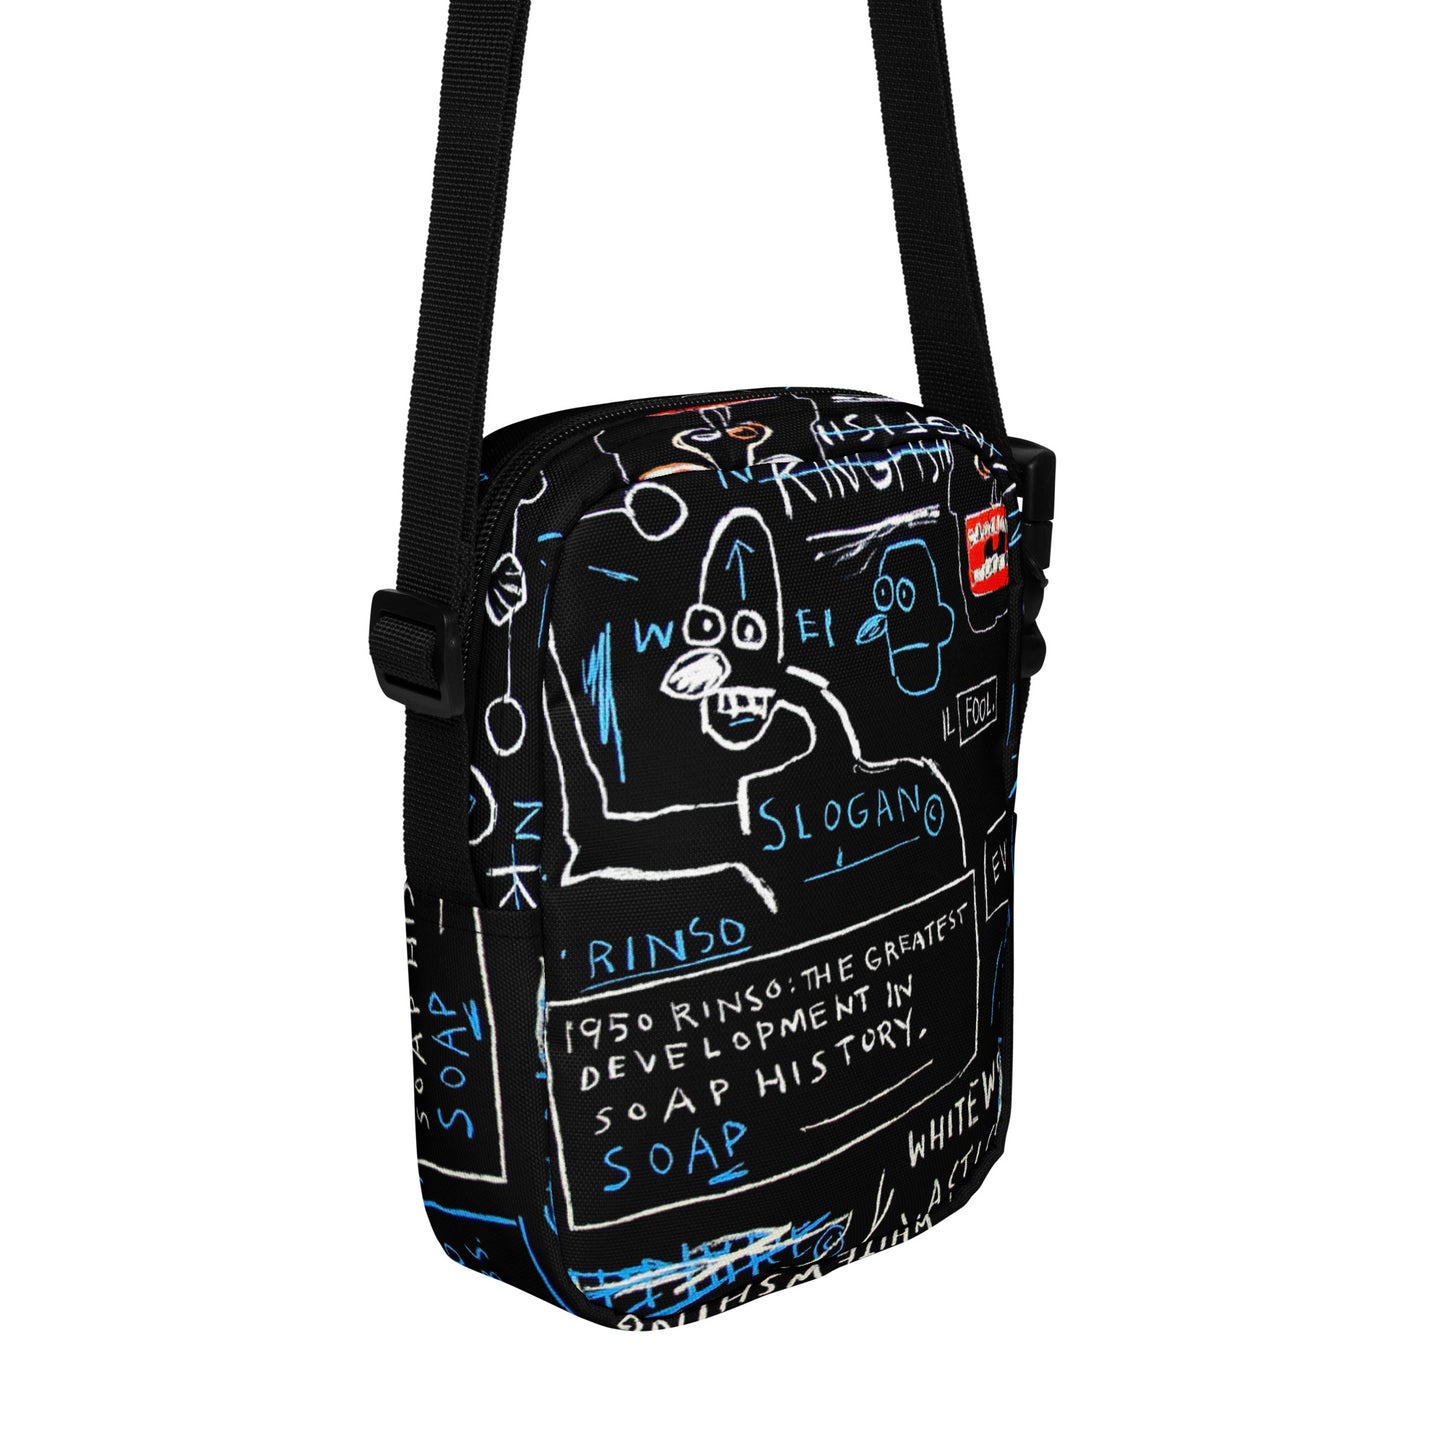 Jean-Michel Basquiat "Rinso" Artwork Bag